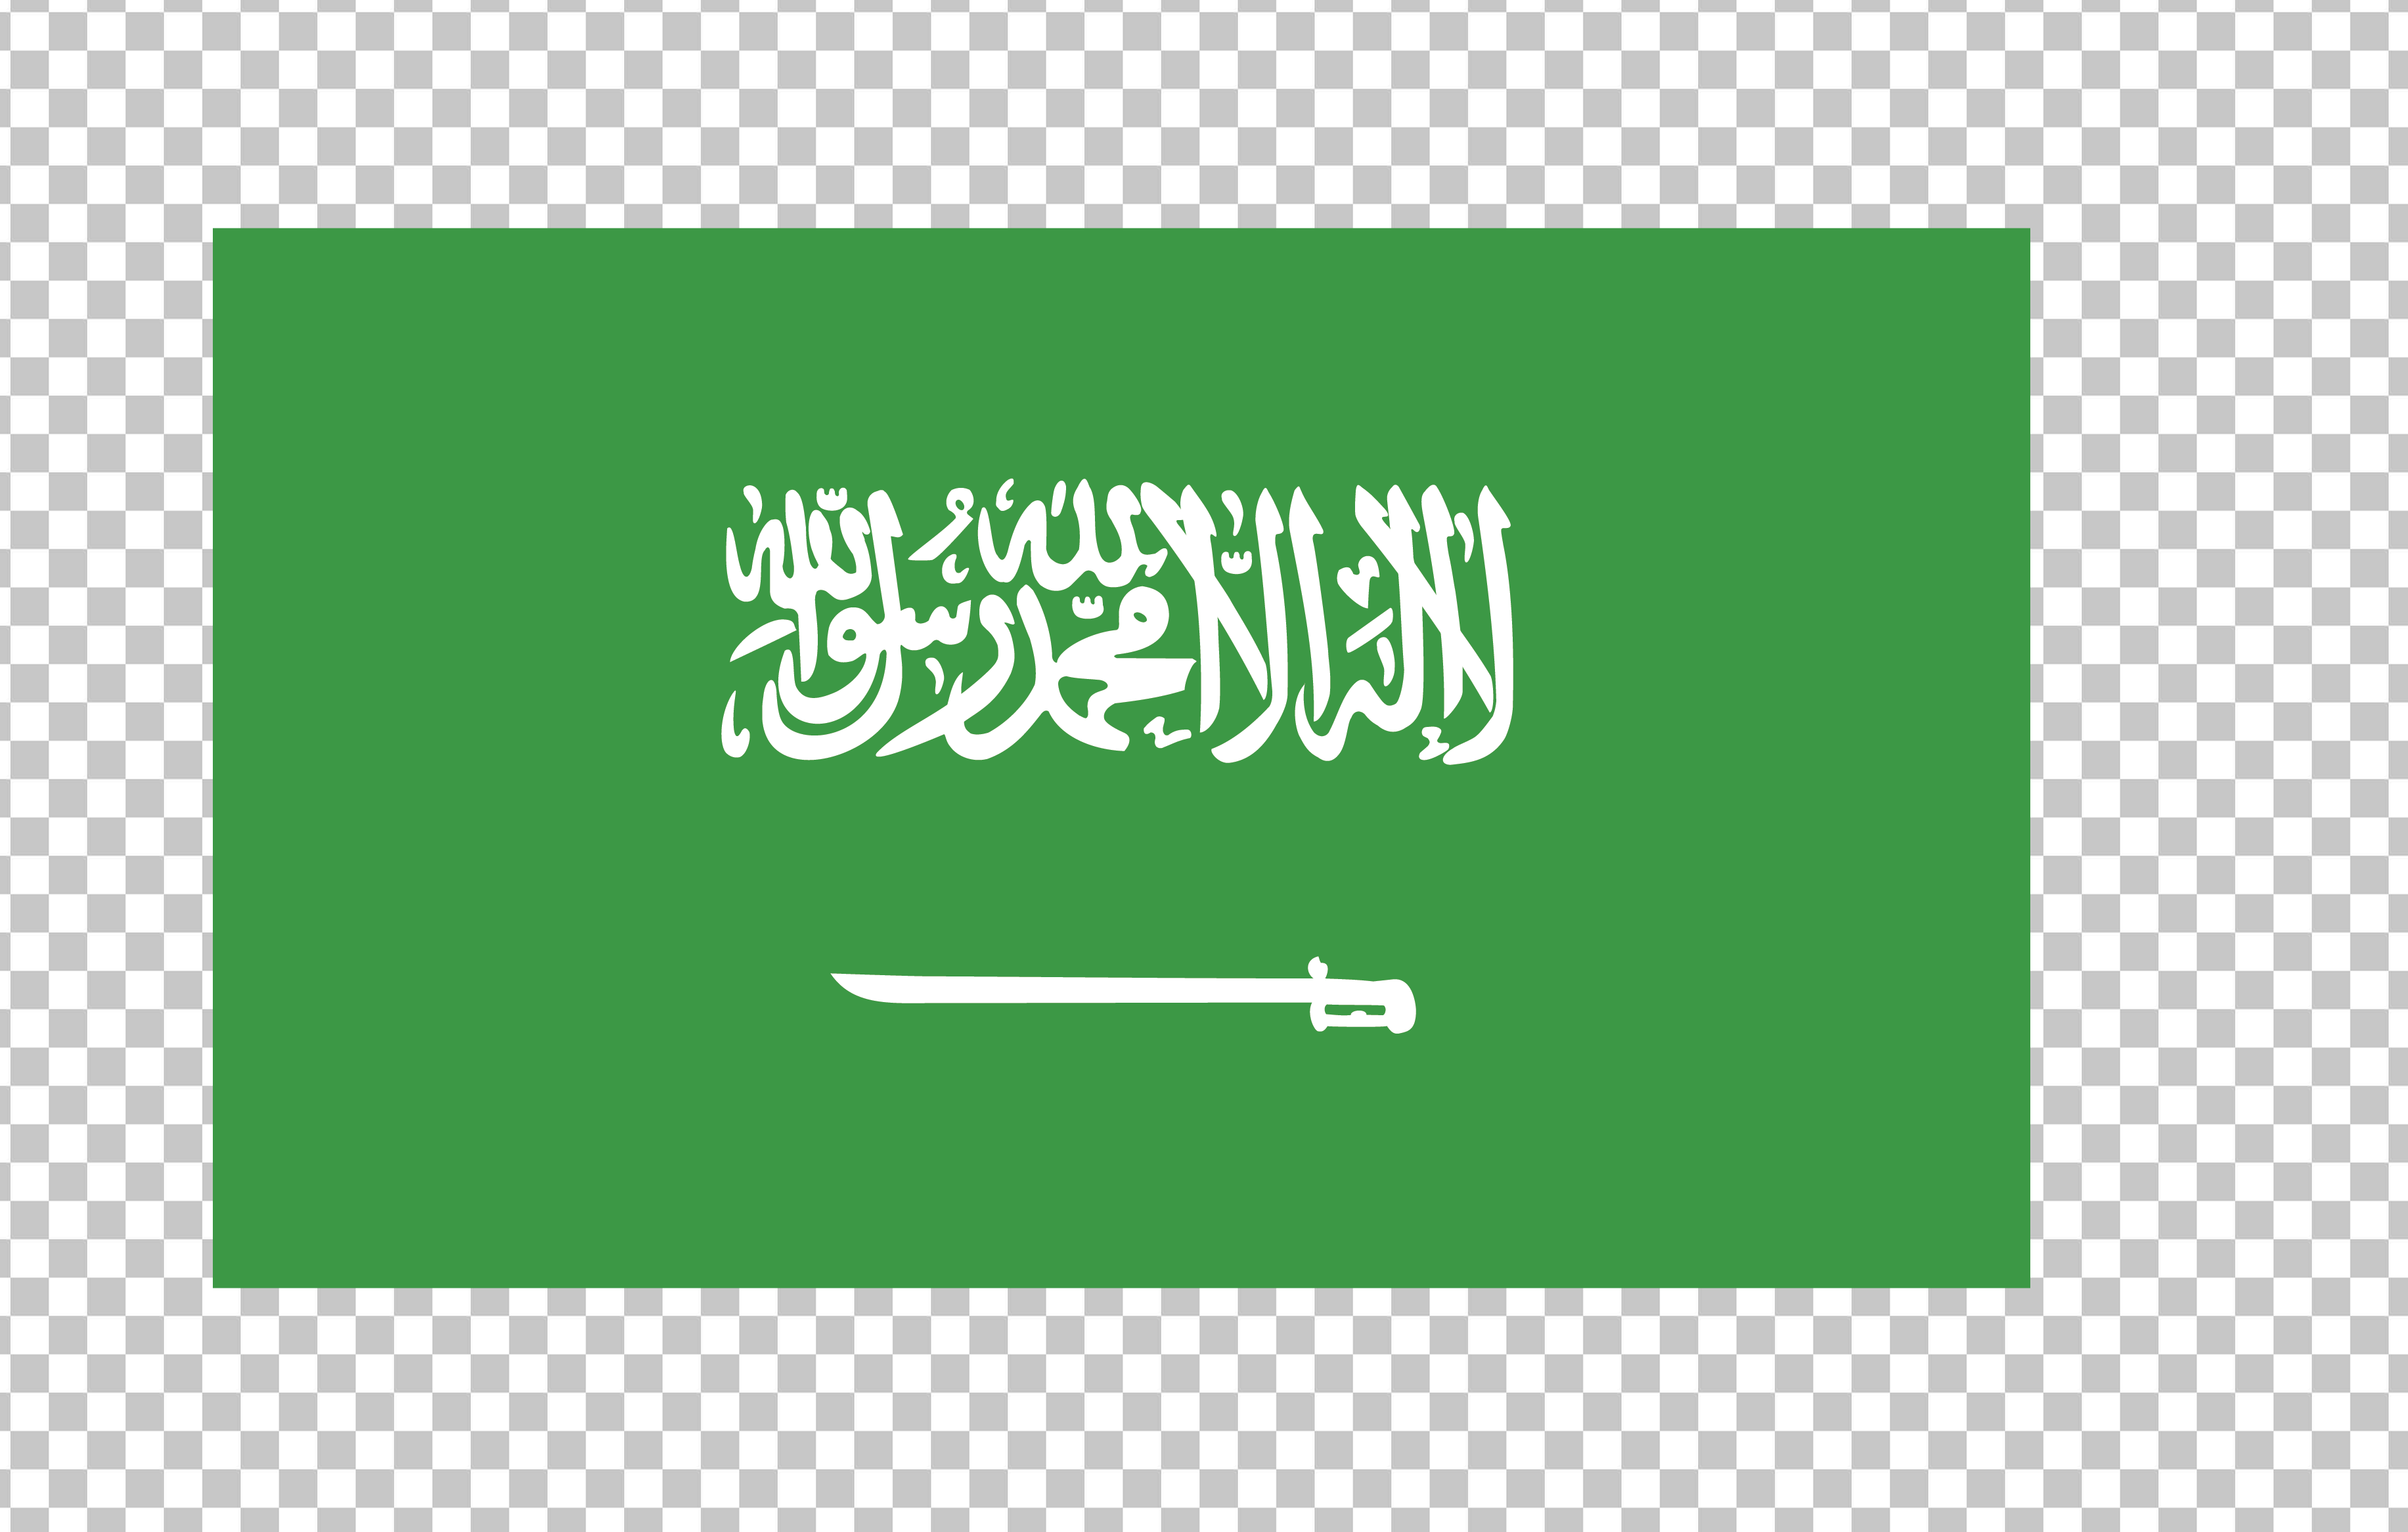 Flag of Saudi Arabia PNG Image